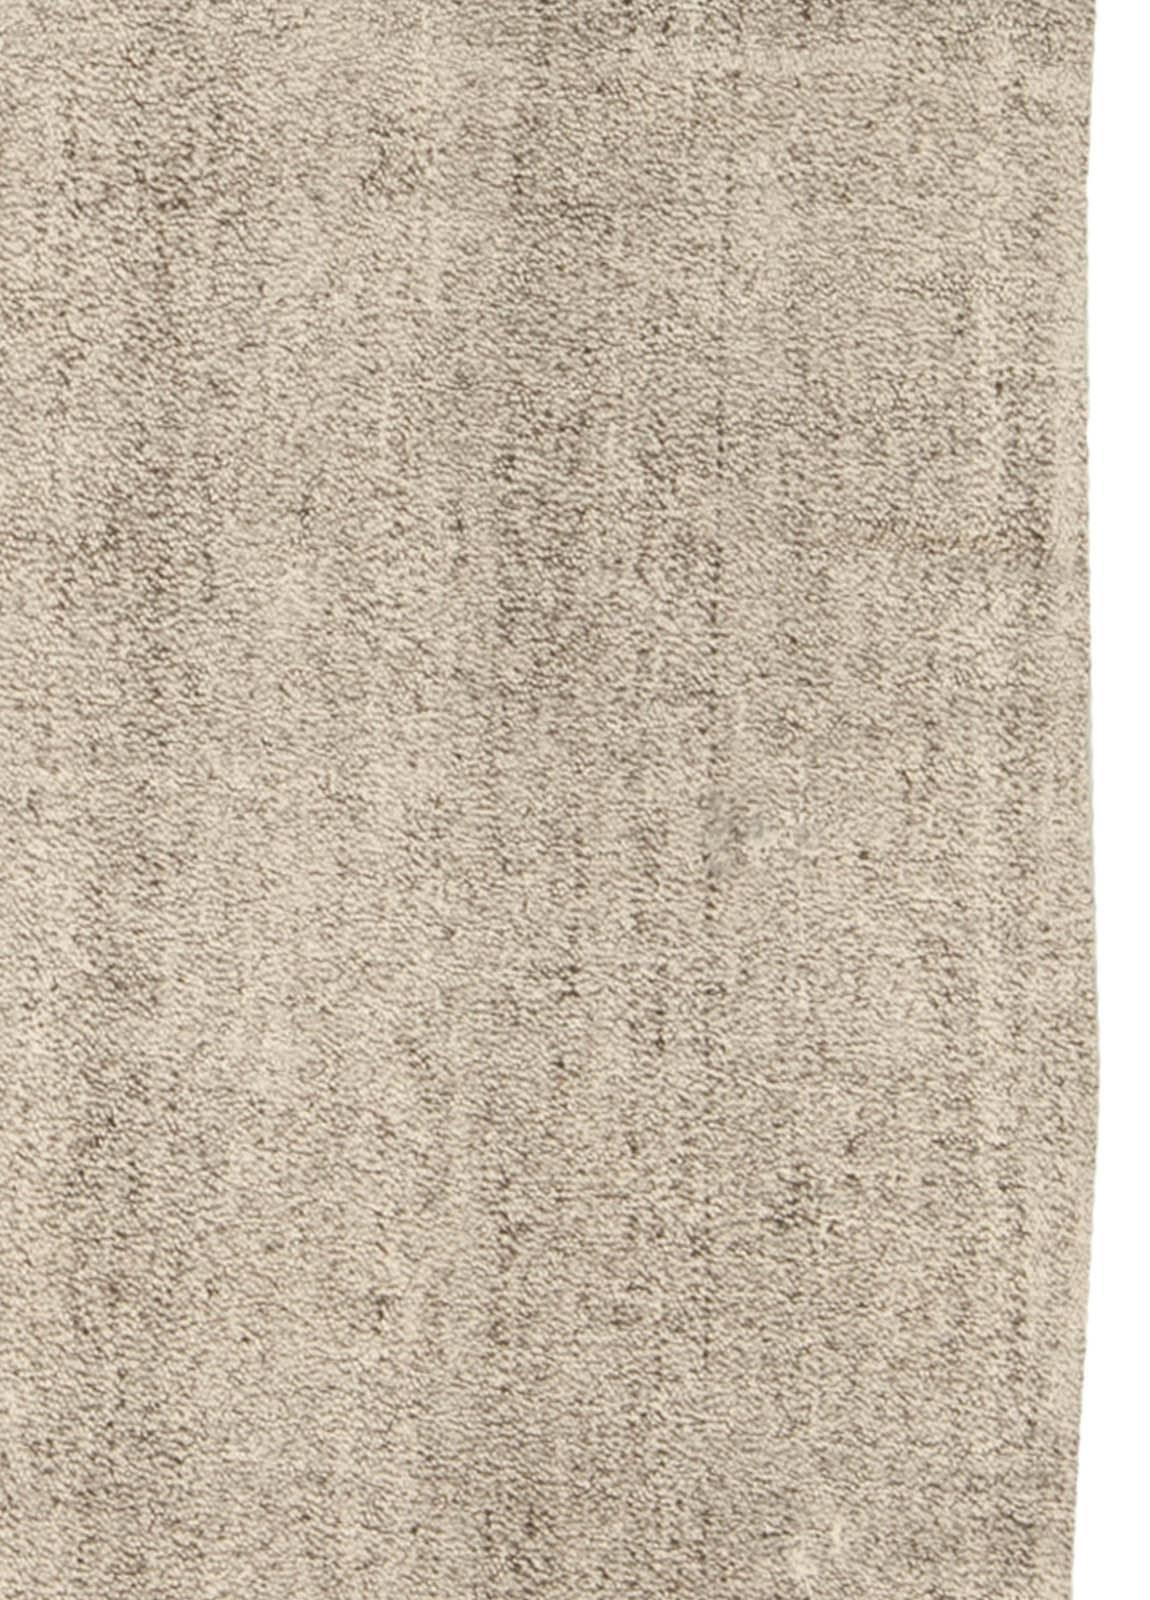 Contemporary Modern Persian Beige and Grey Handmade Wool Kilim Rug by Dorie Leslie Blau For Sale